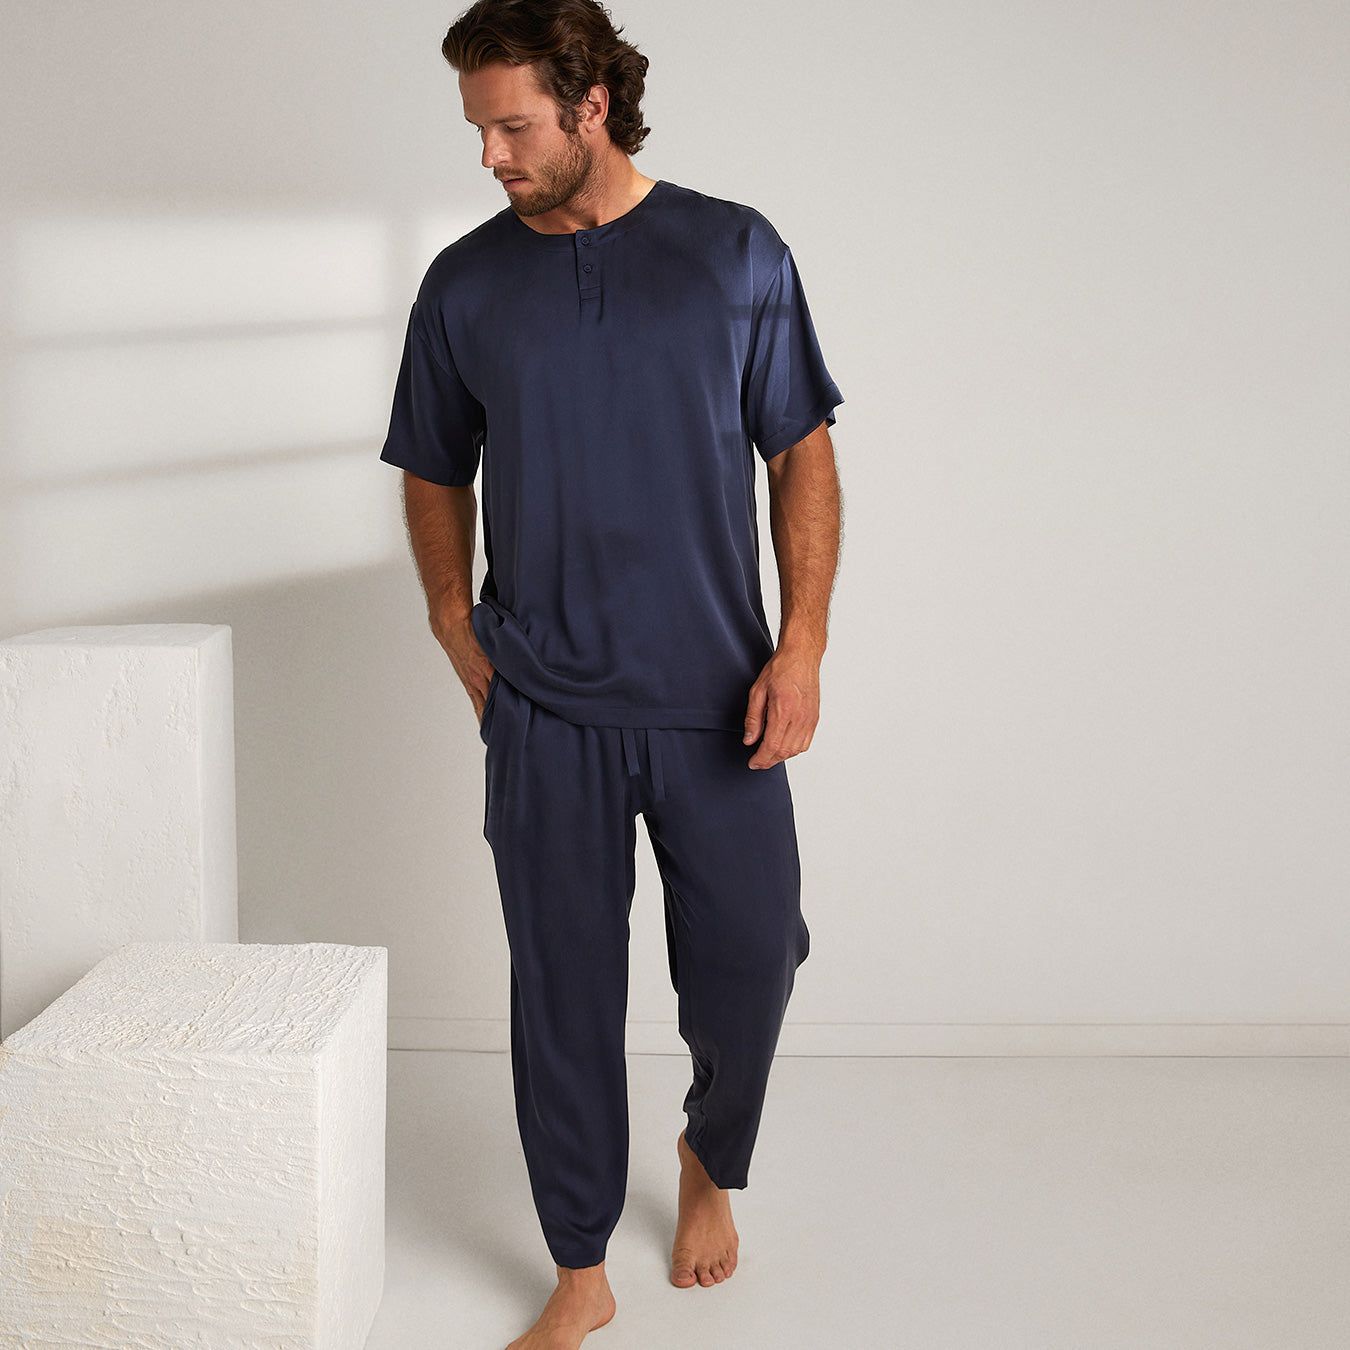 Radyan Men's Soft Stretchy Pajama Pants. Cotton Nightwear Pajama. Boy's  Bottom Pant. Assorted Colors, Pack of 4 - Best gift for boy's - Walmart.com